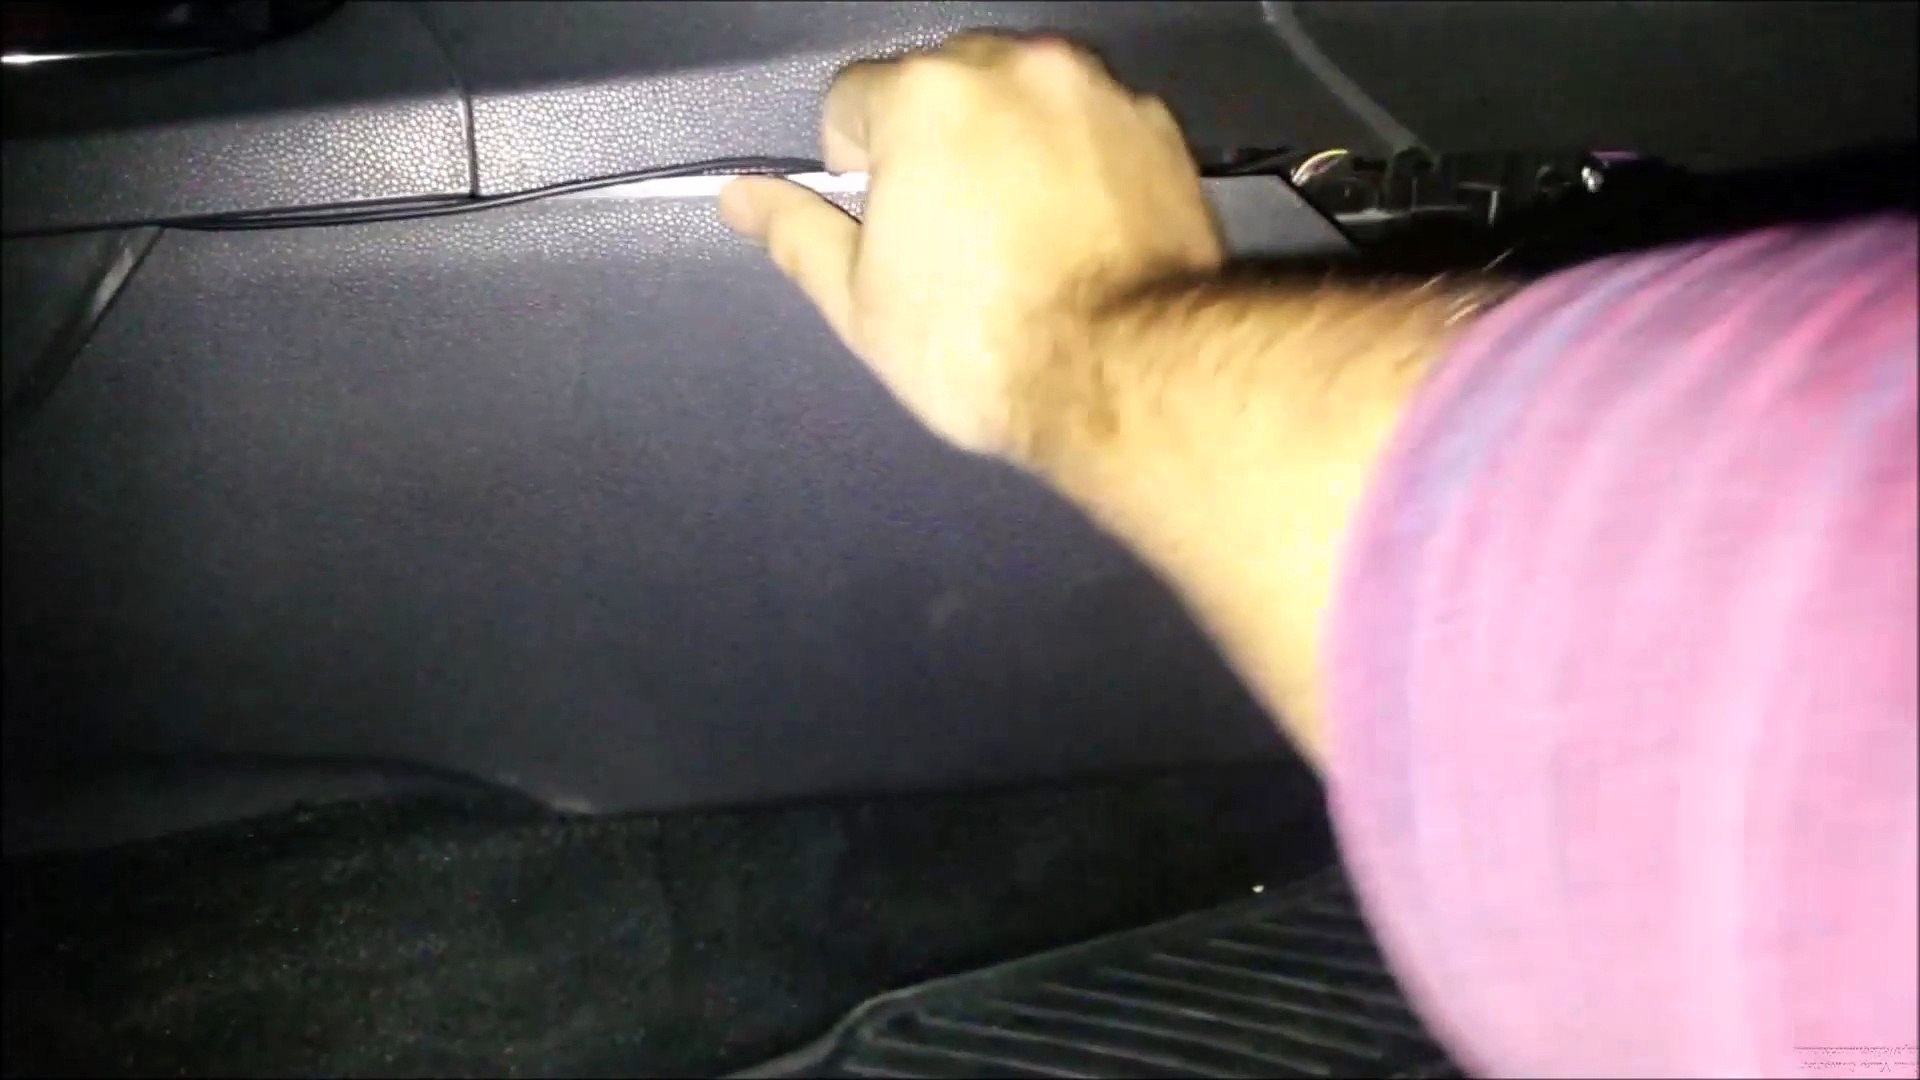 Ford Fiesta 2013 model-1.25 82 ps polen filtre değişimi-how to change  pollen filter - Dailymotion Video